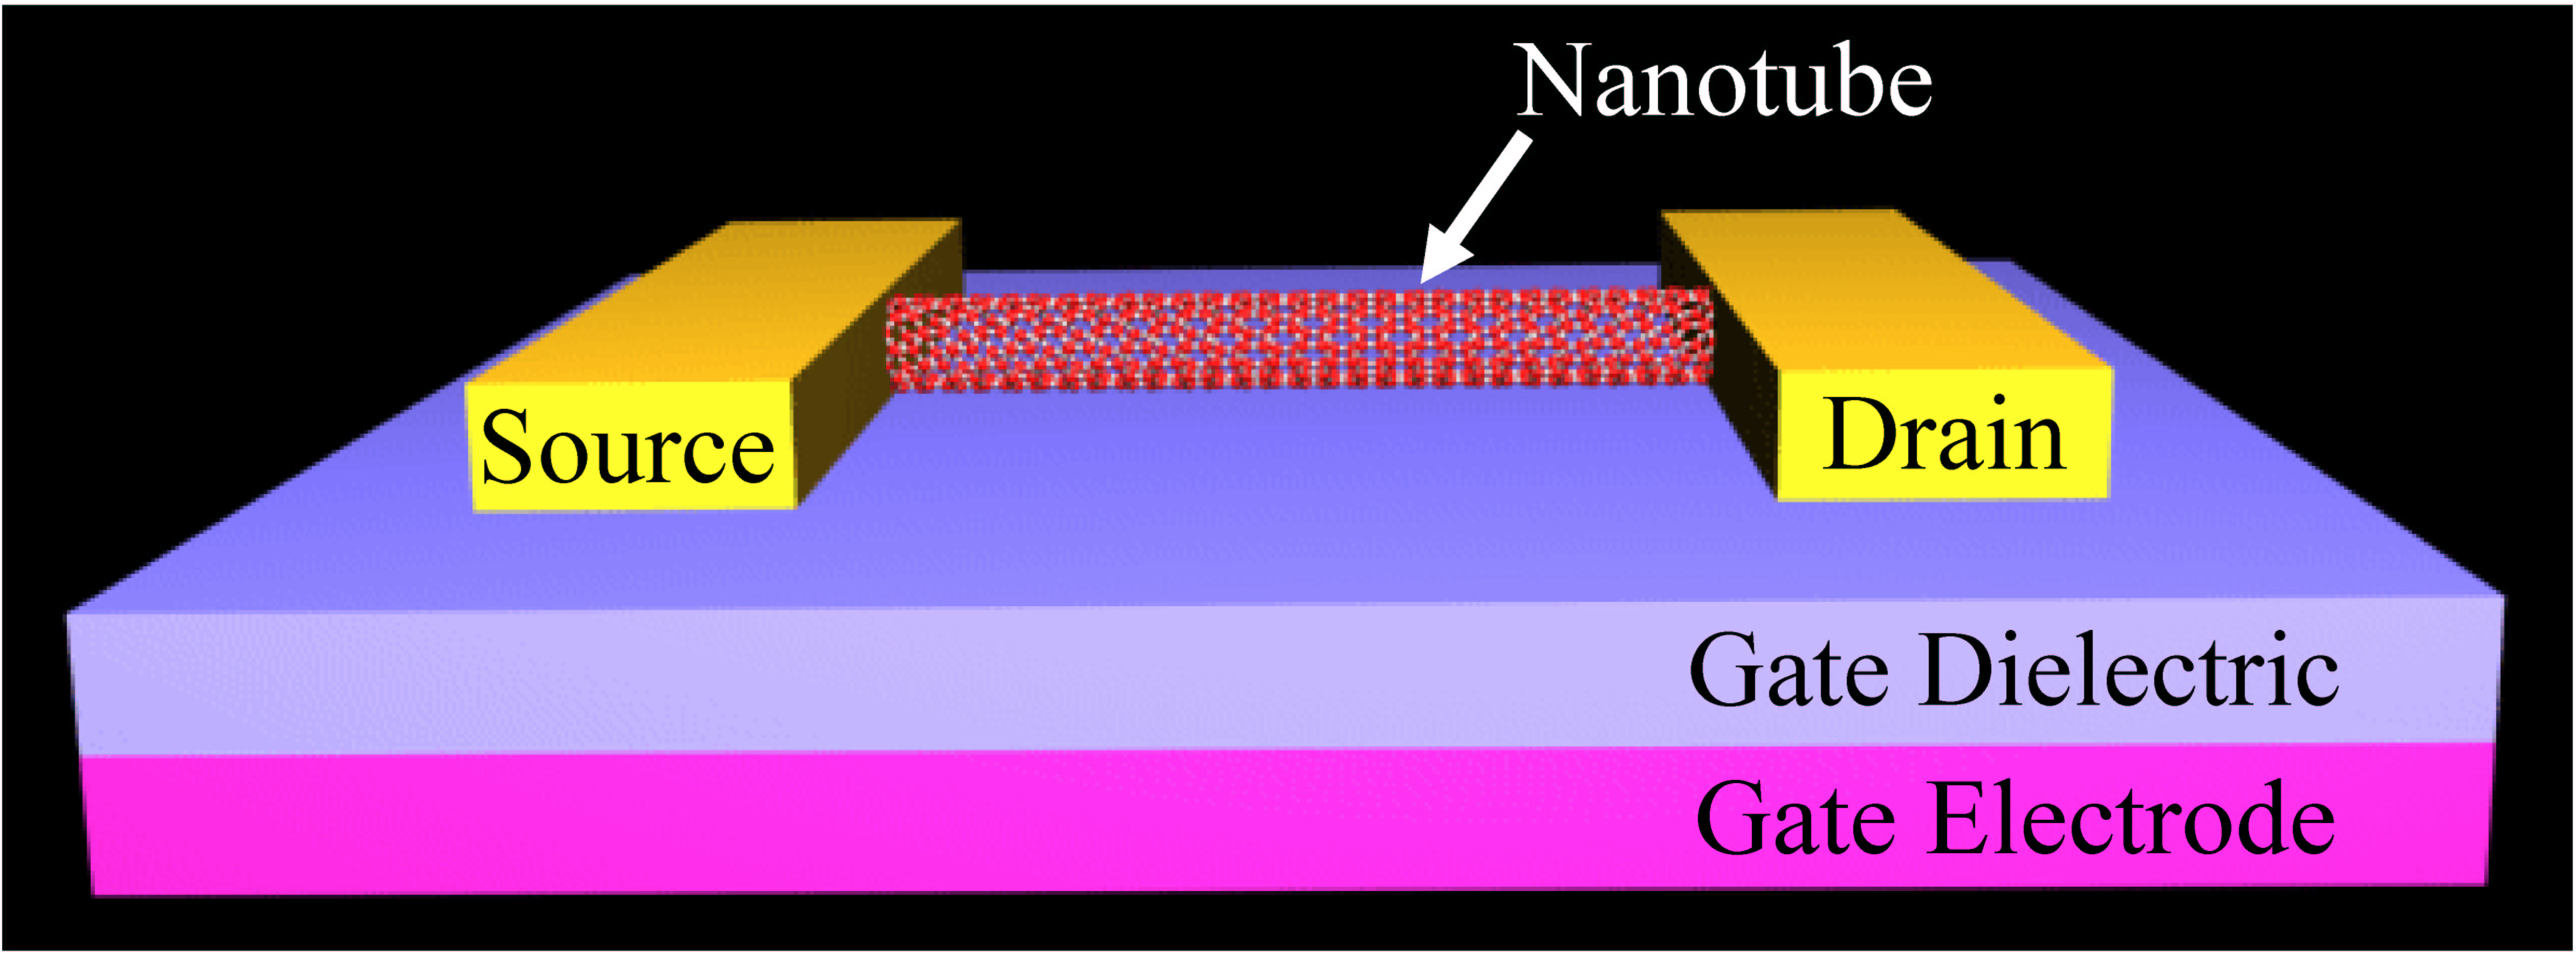 Nanotube Device